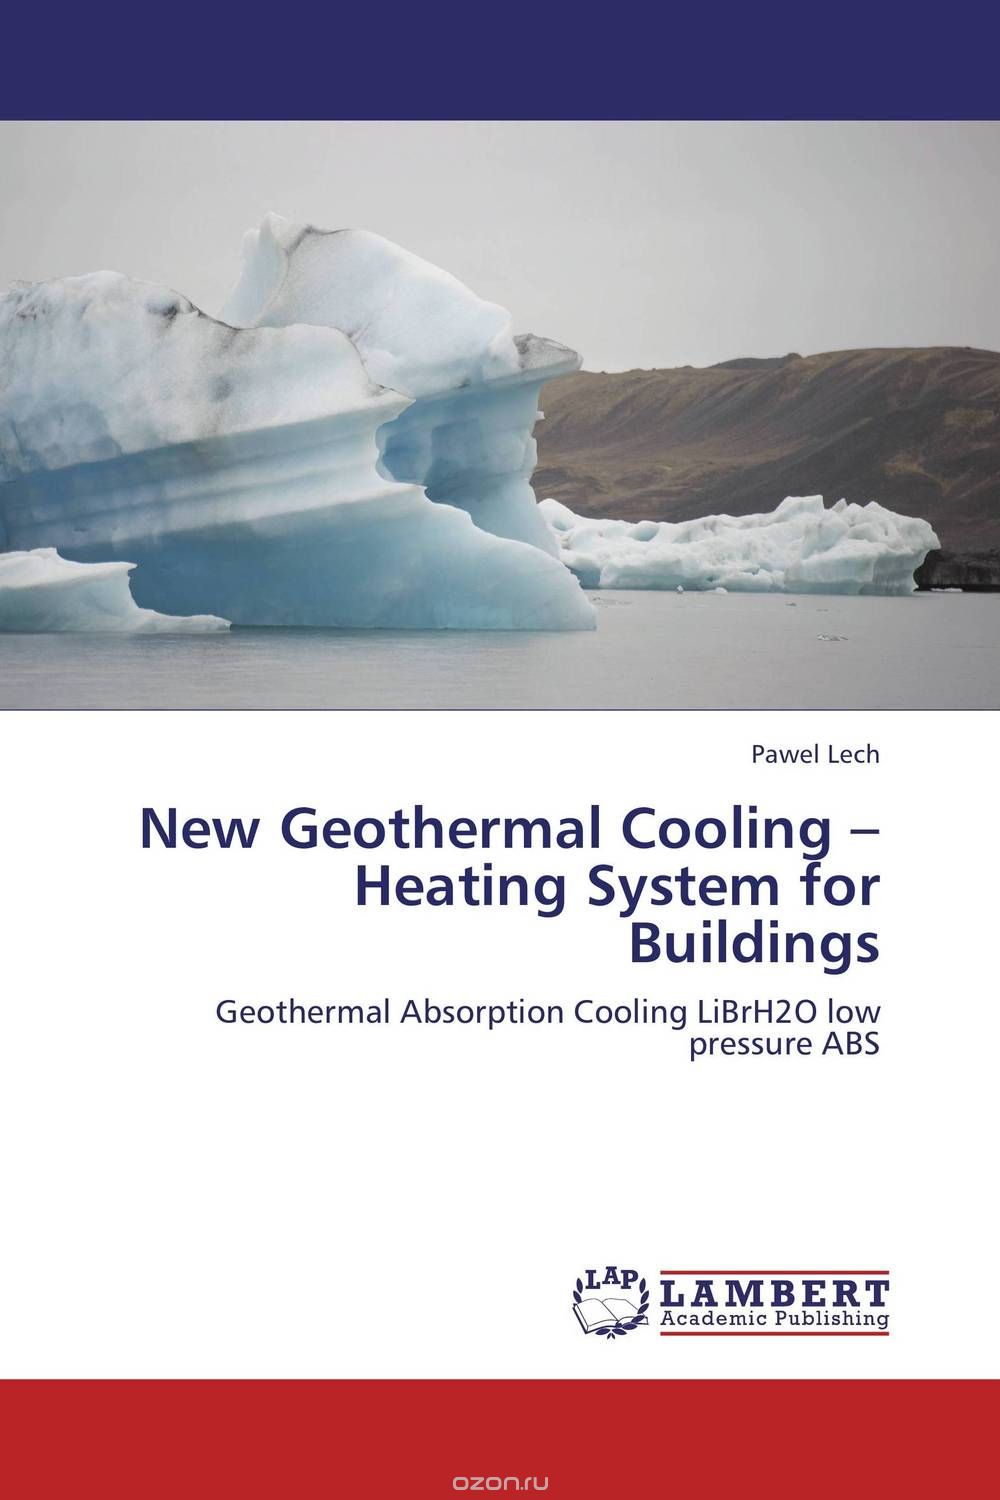 Скачать книгу "New Geothermal Cooling – Heating System for Buildings"